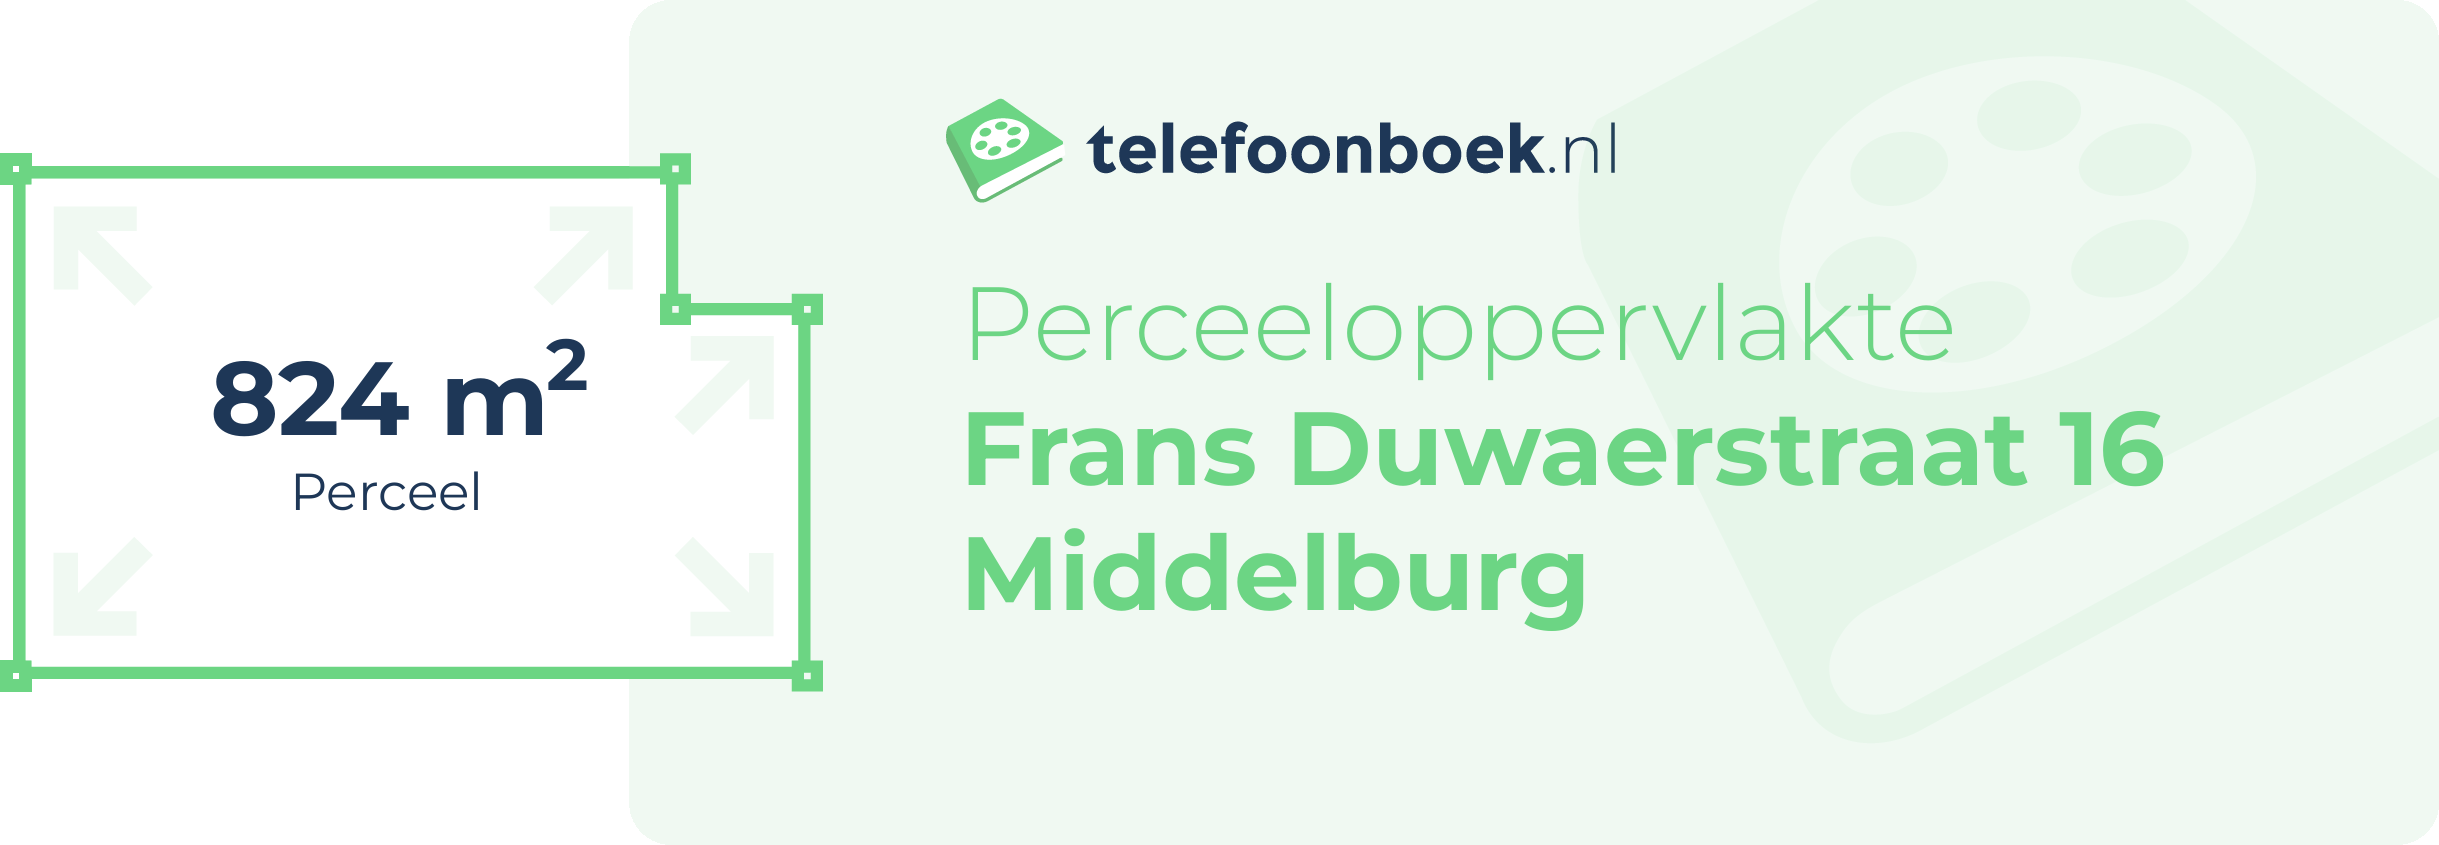 Perceeloppervlakte Frans Duwaerstraat 16 Middelburg